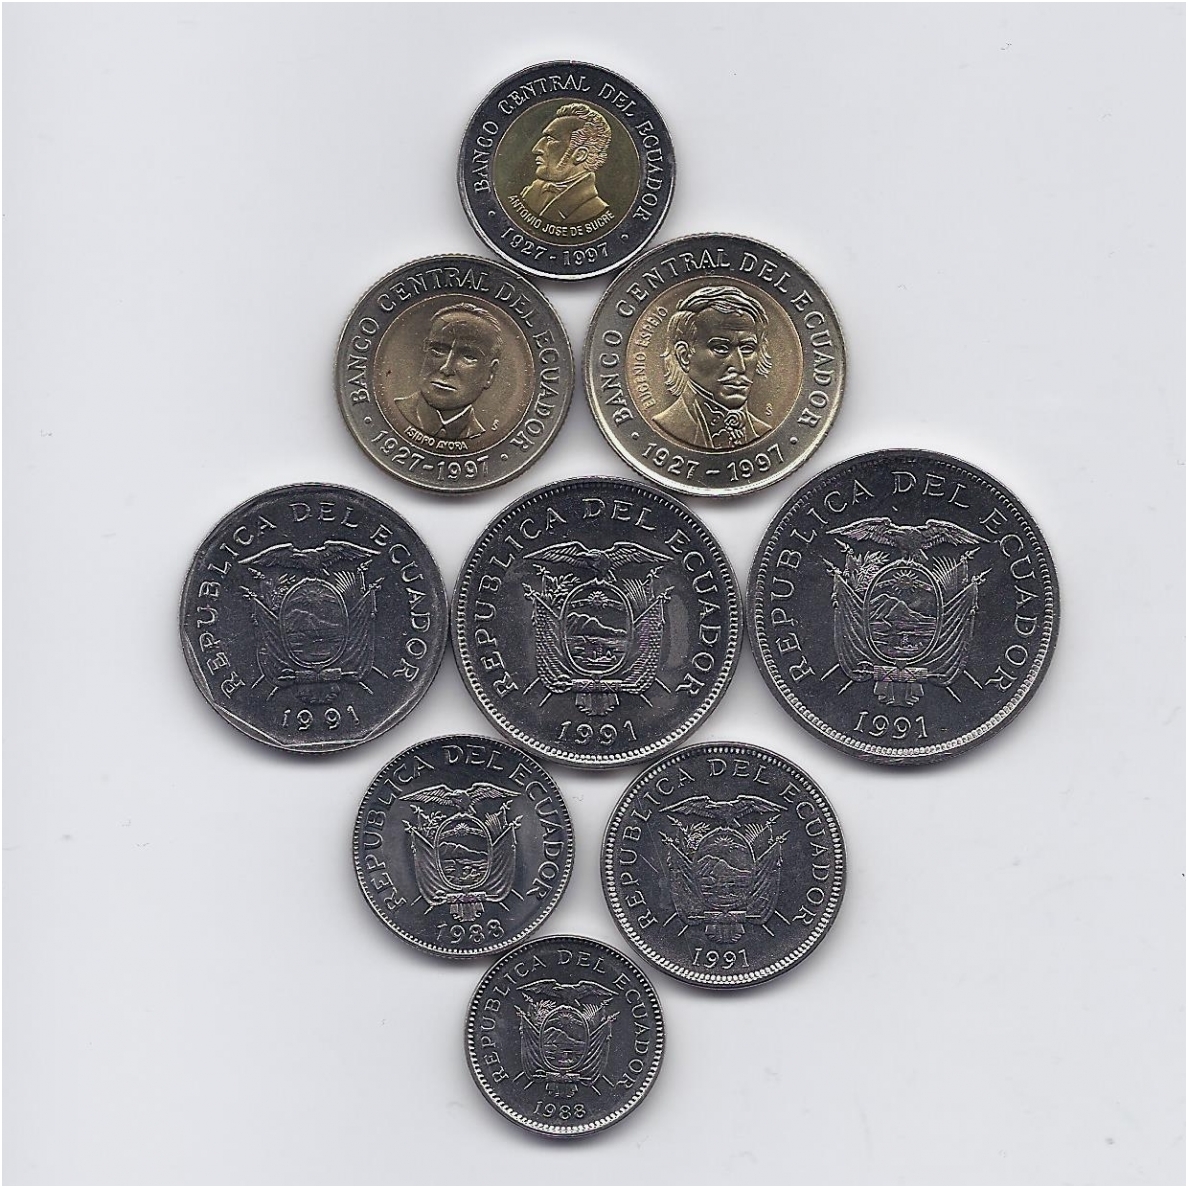 1 set of 9 coins UNC Ecuador coins set